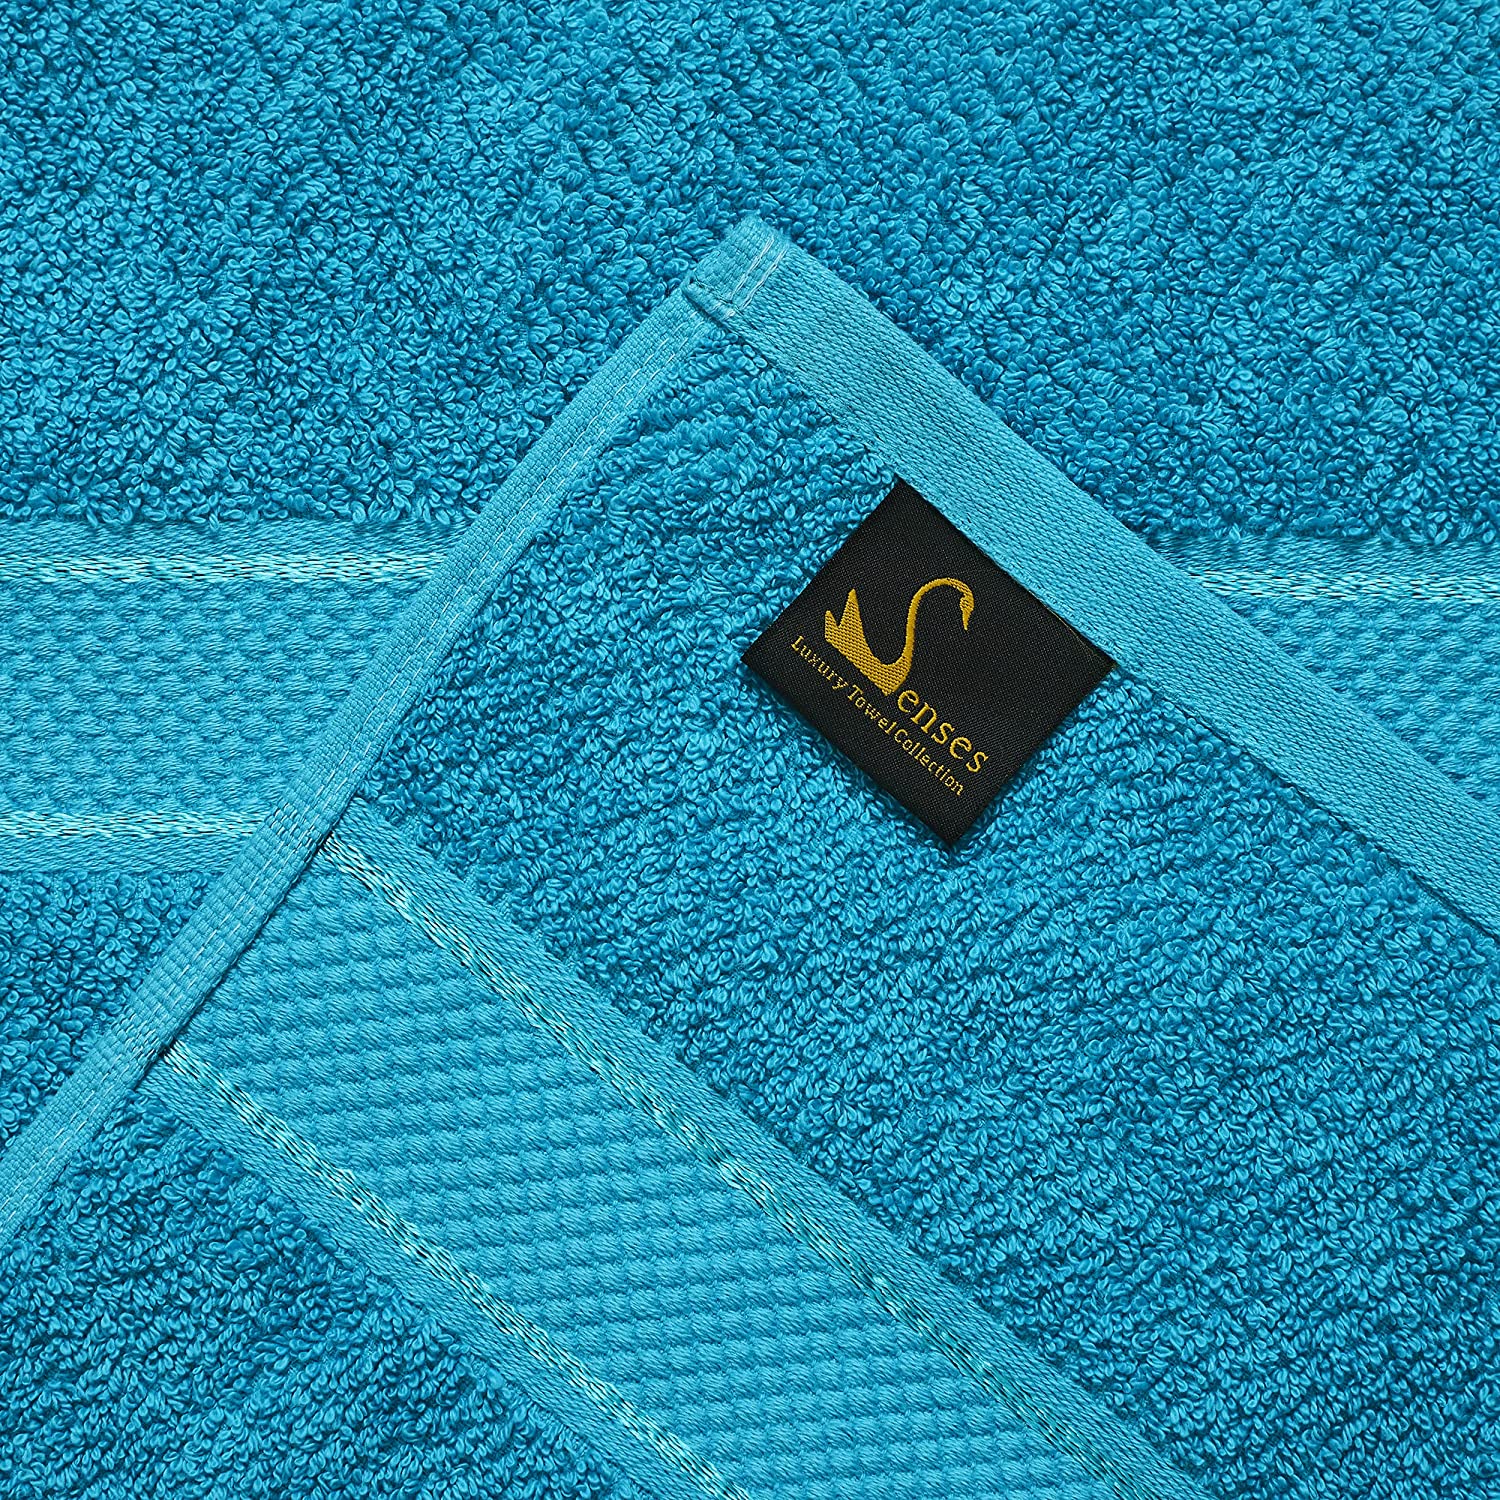 550 GSM 4 Piece Bath Towel Set (Navy, Turquoise, Silver Grey, White)